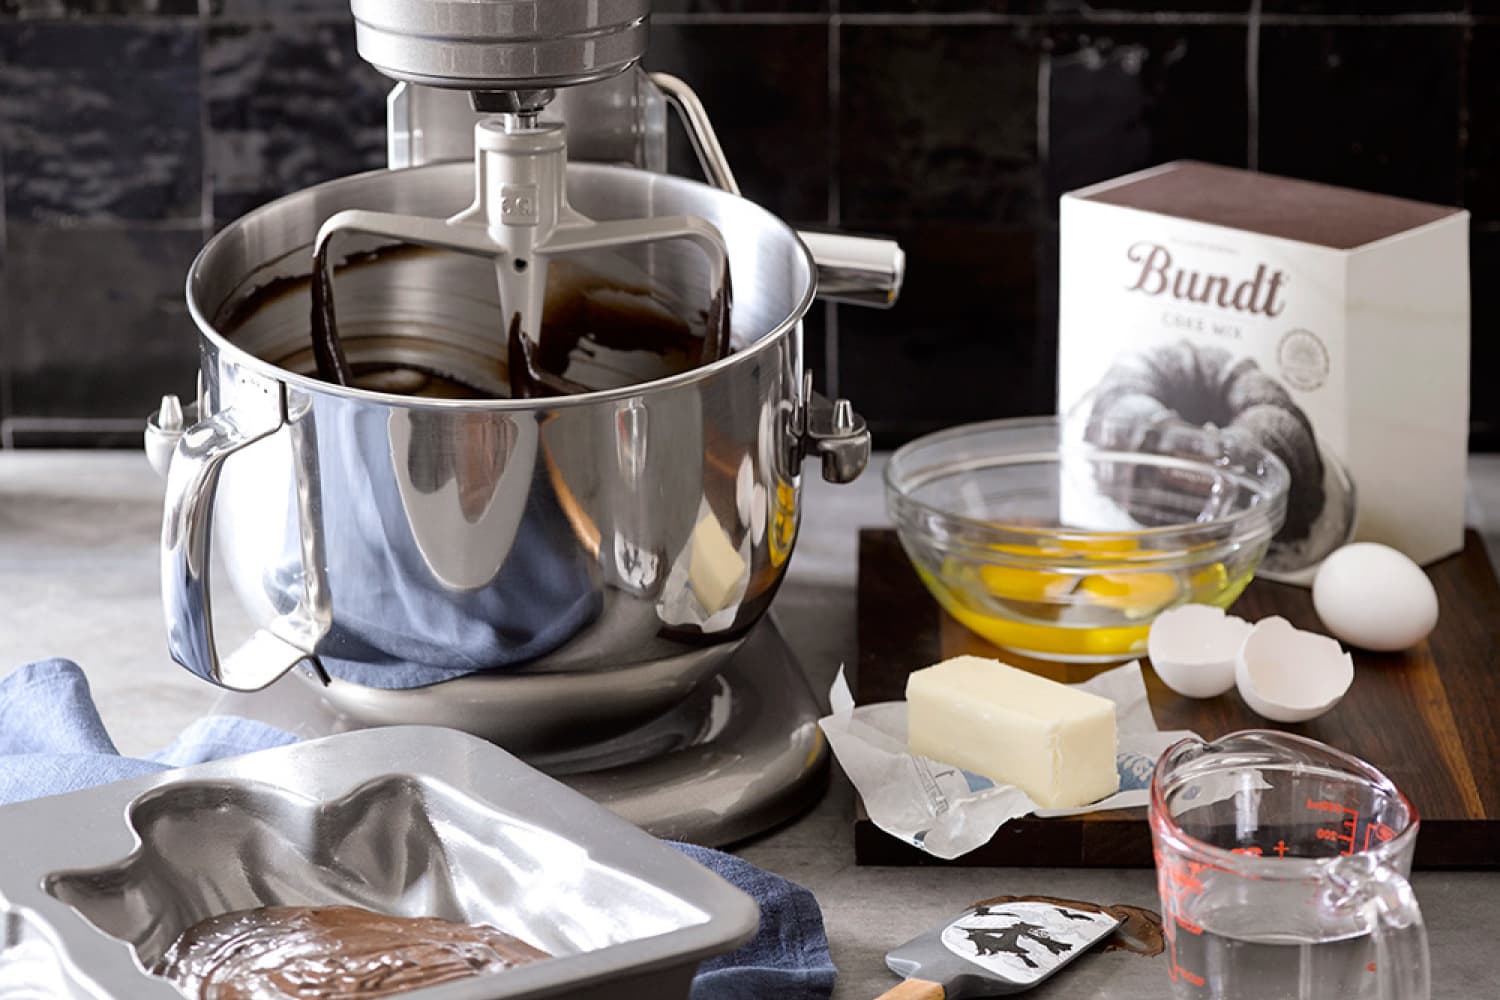 KitchenAid Milkshake 7-Quart Bowl-Lift Stand Mixer + Reviews